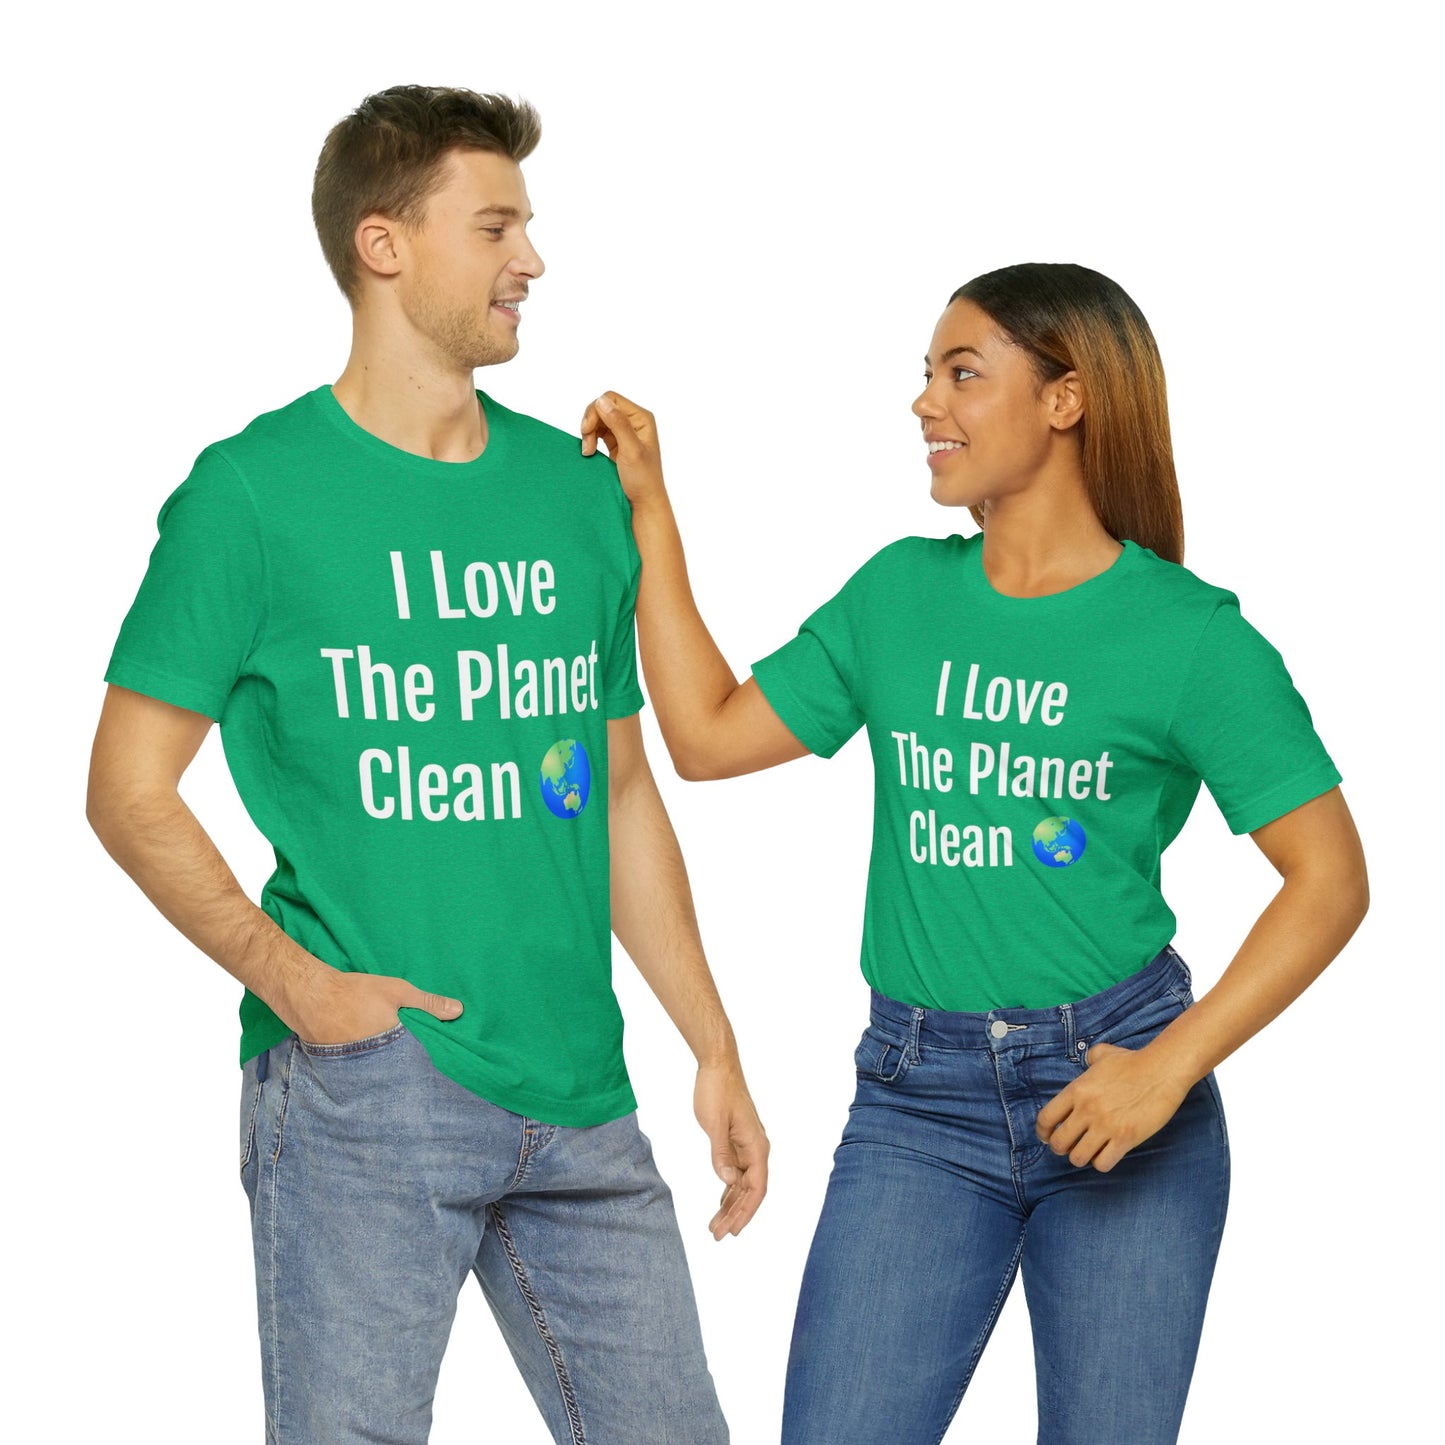 Clean Planet Activist T-Shirt T-Shirt Petrova Designs